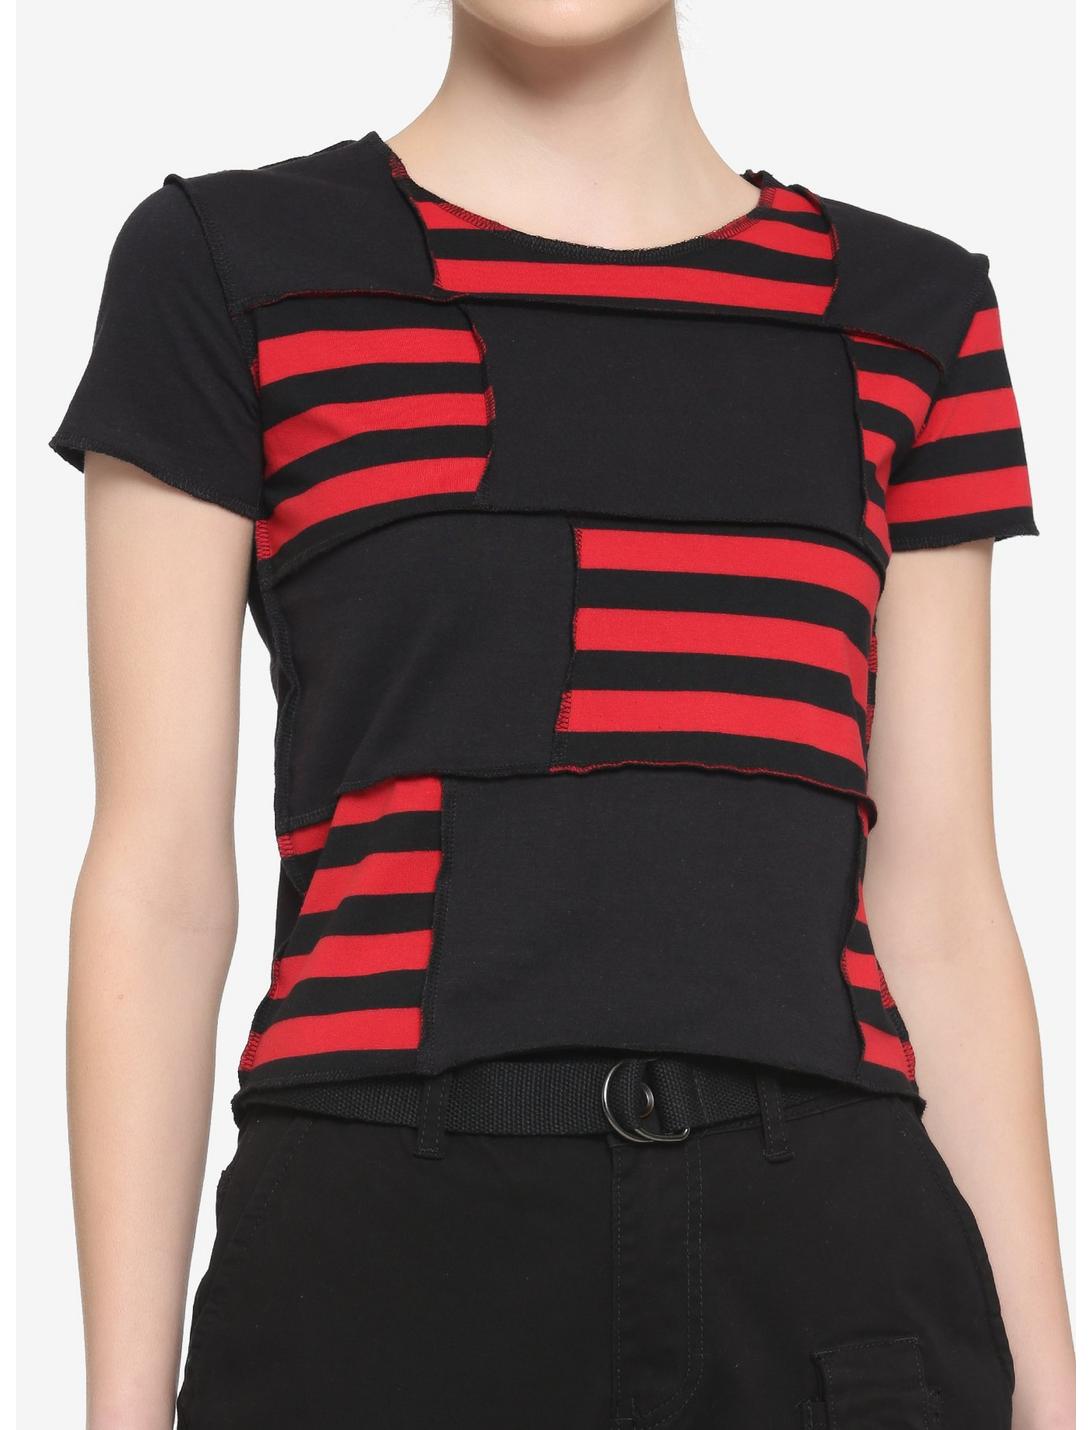 Black & Red Stripe Patchwork Girls Baby T-Shirt, STRIPES - RED, hi-res